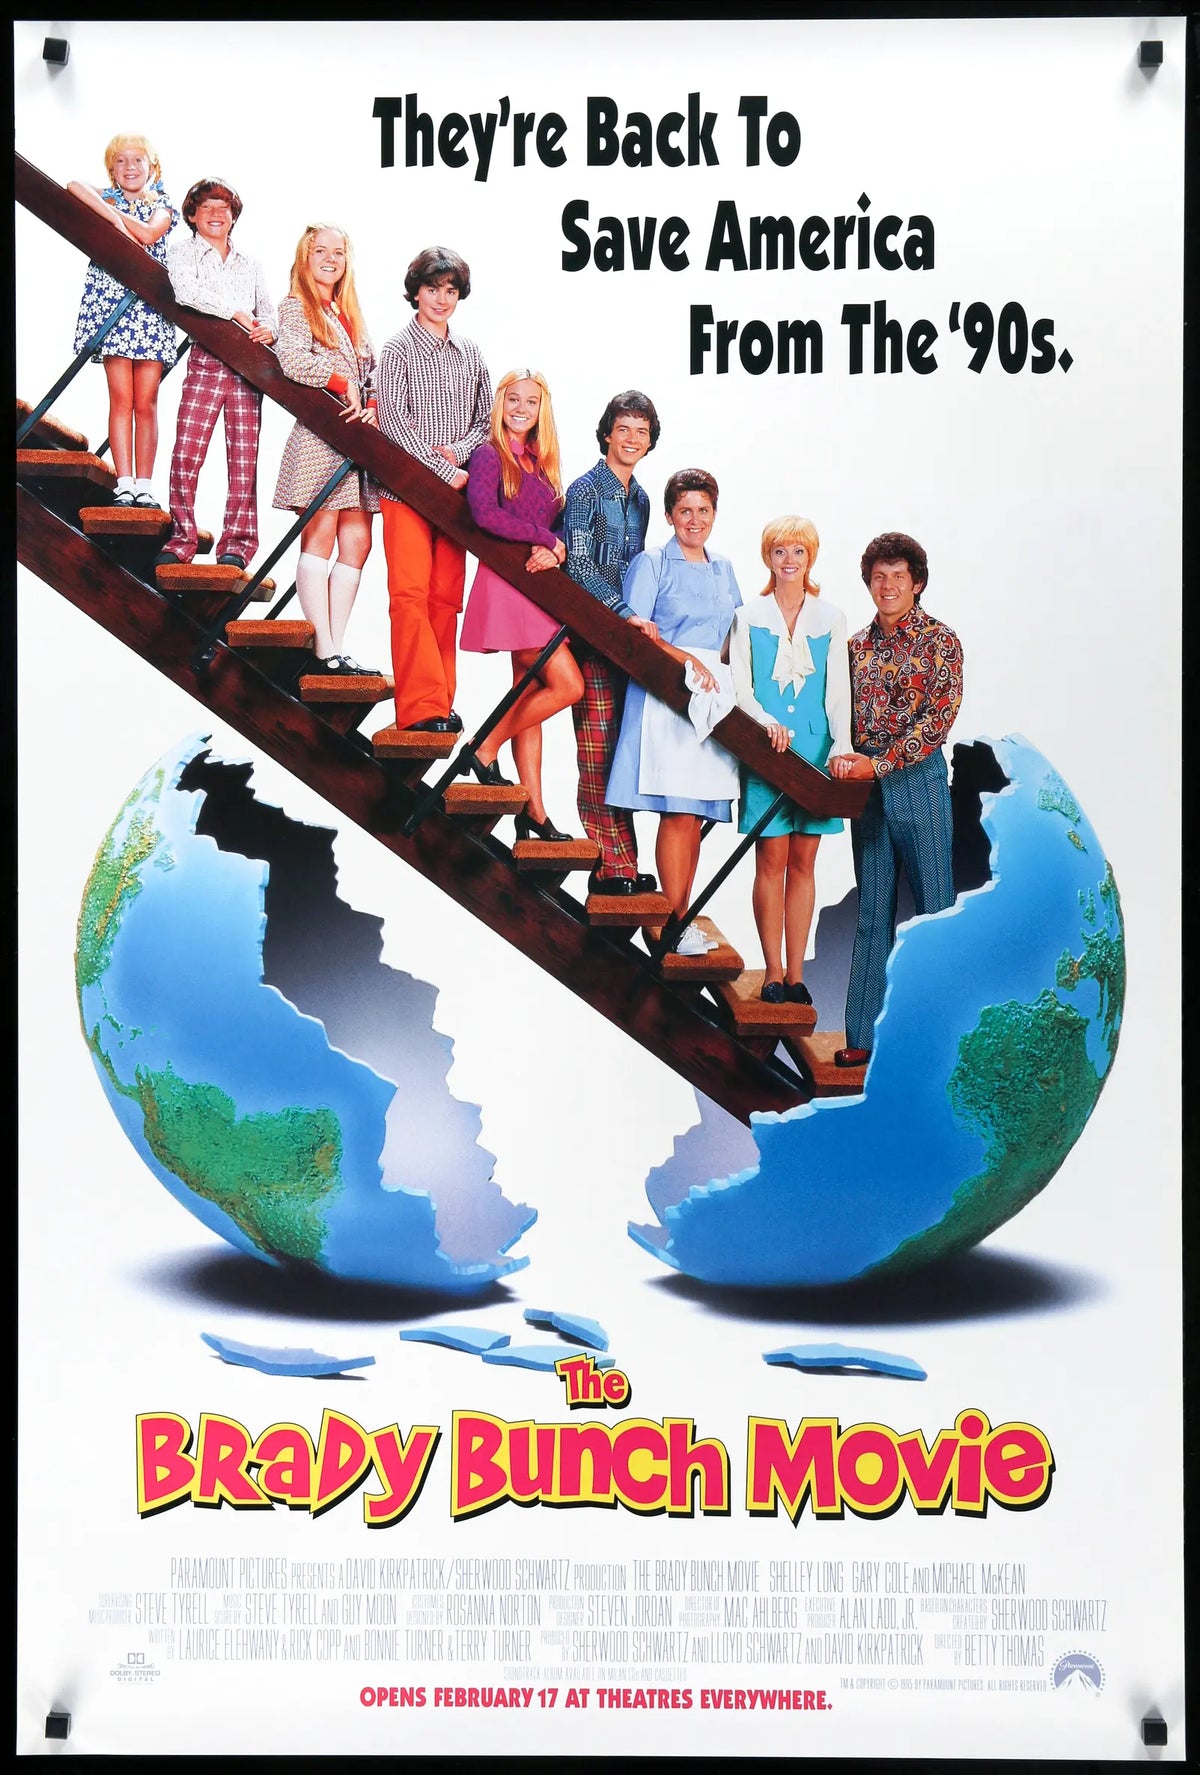 Brady Bunch Movie (1995) original movie poster for sale at Original Film Art